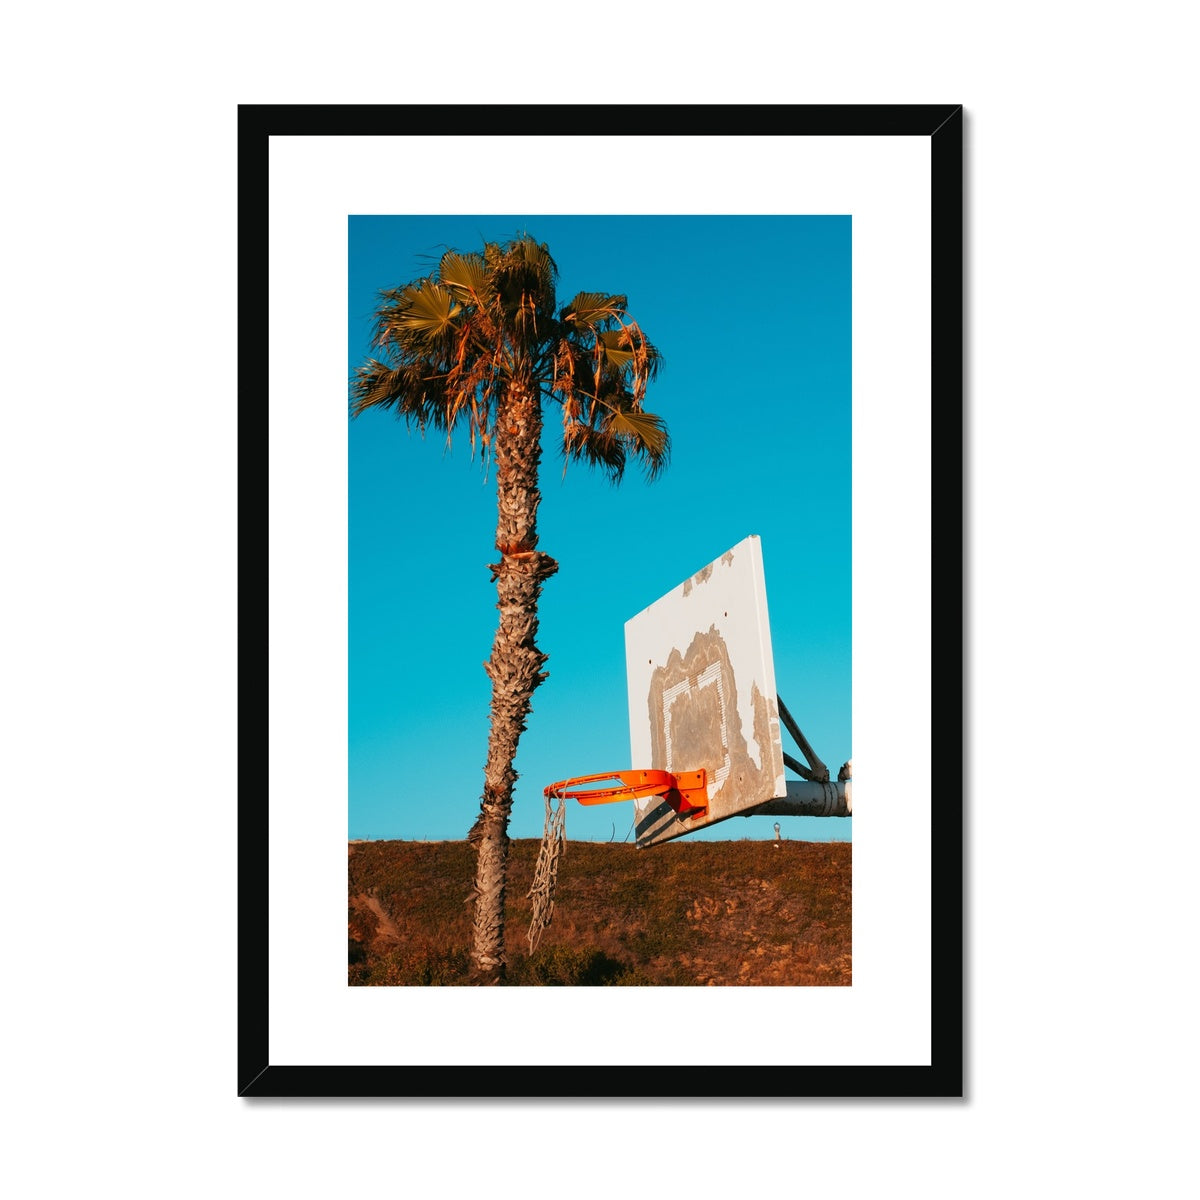 Taking Shots Vol.1 #46 - Playa del Rey, CA